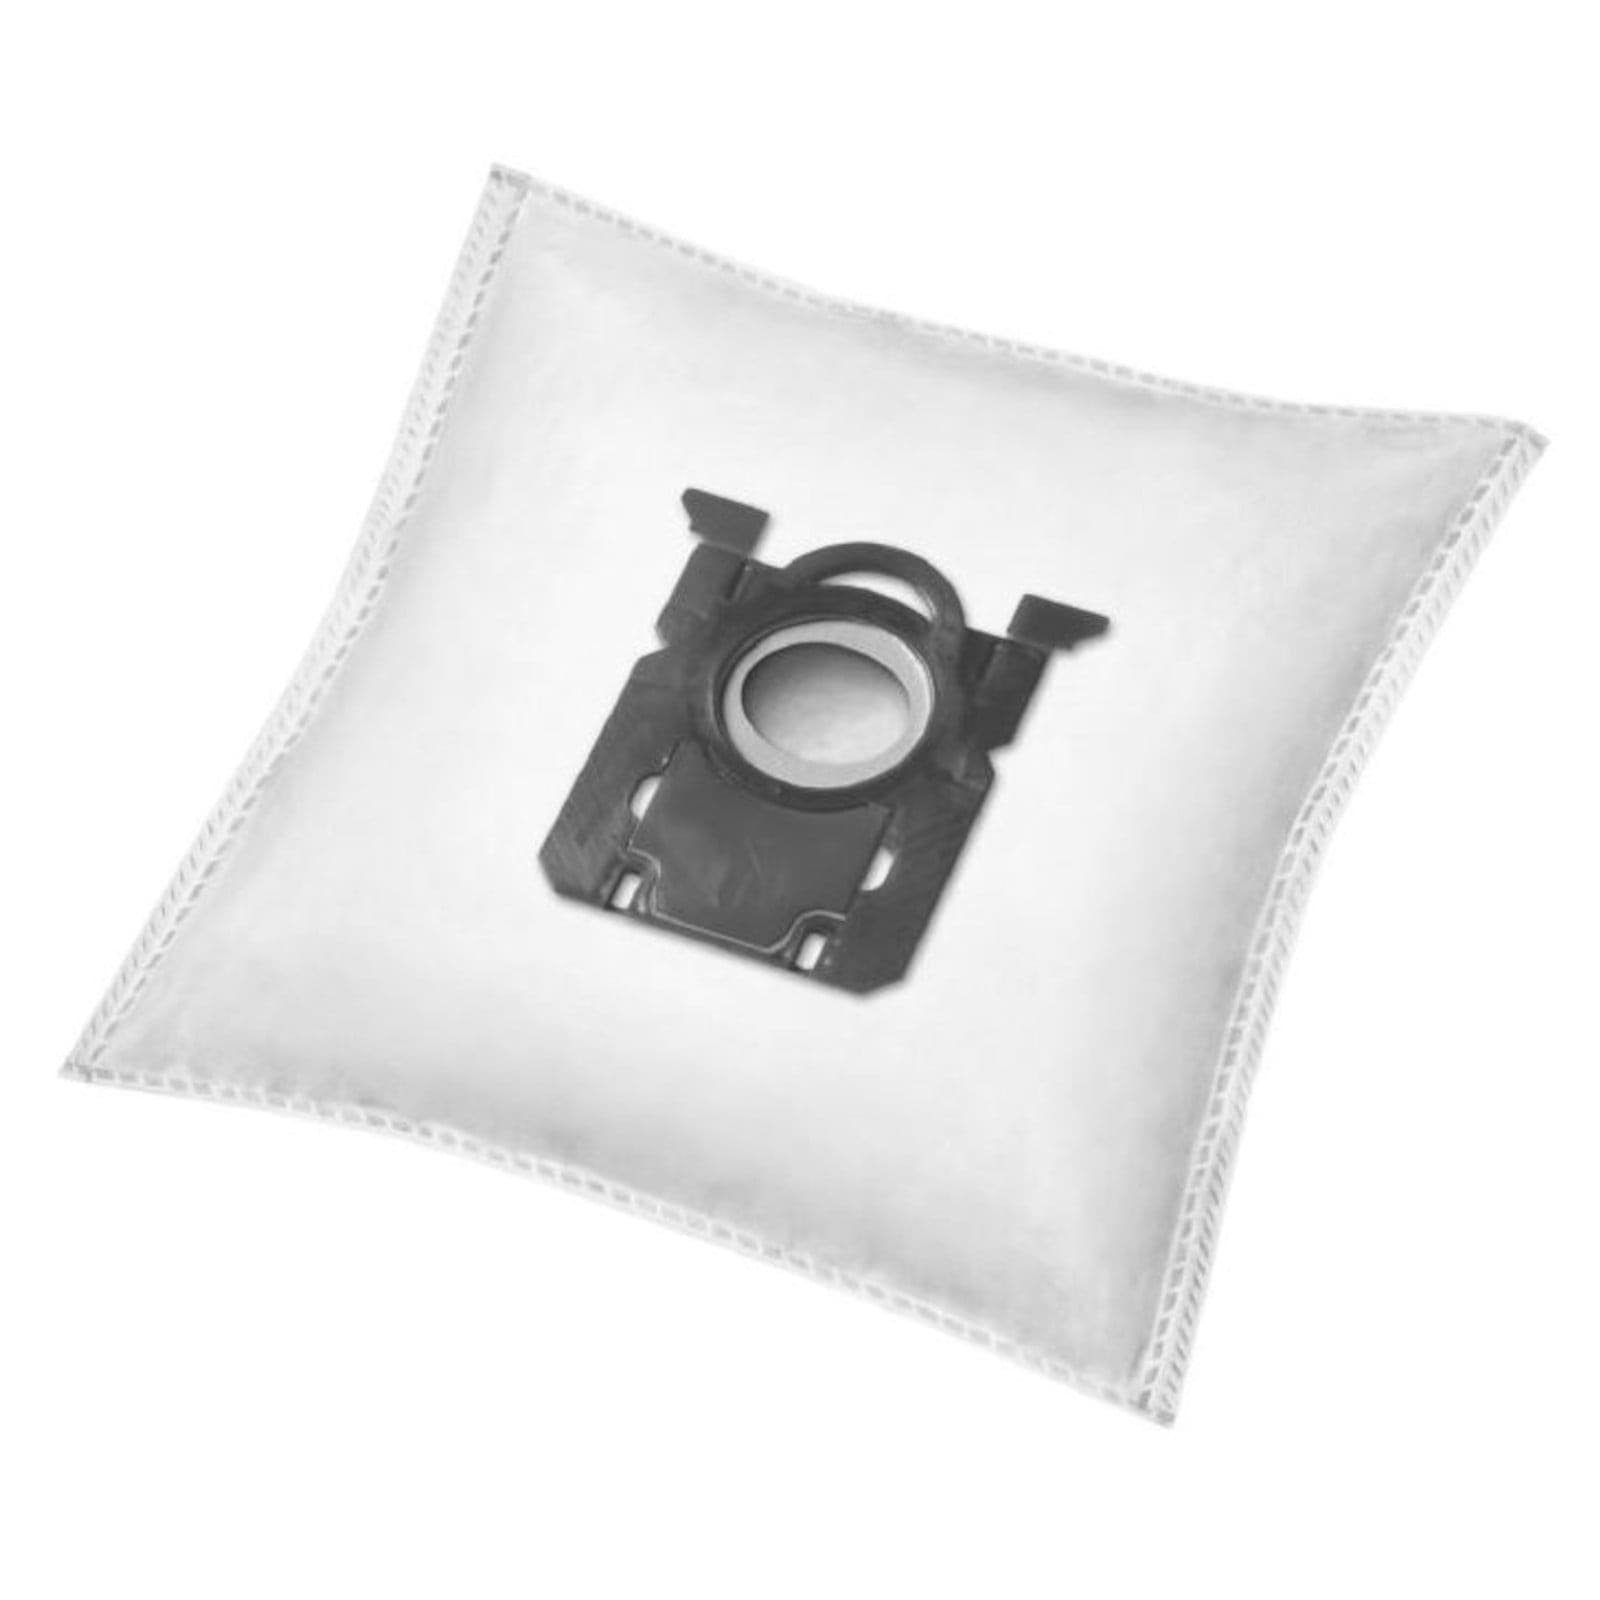 Reinica Staubsaugerbeutel passend für Electrolux Standard-Bag, 20er-Pack Staubbeutel Saugerbeutel Beutel